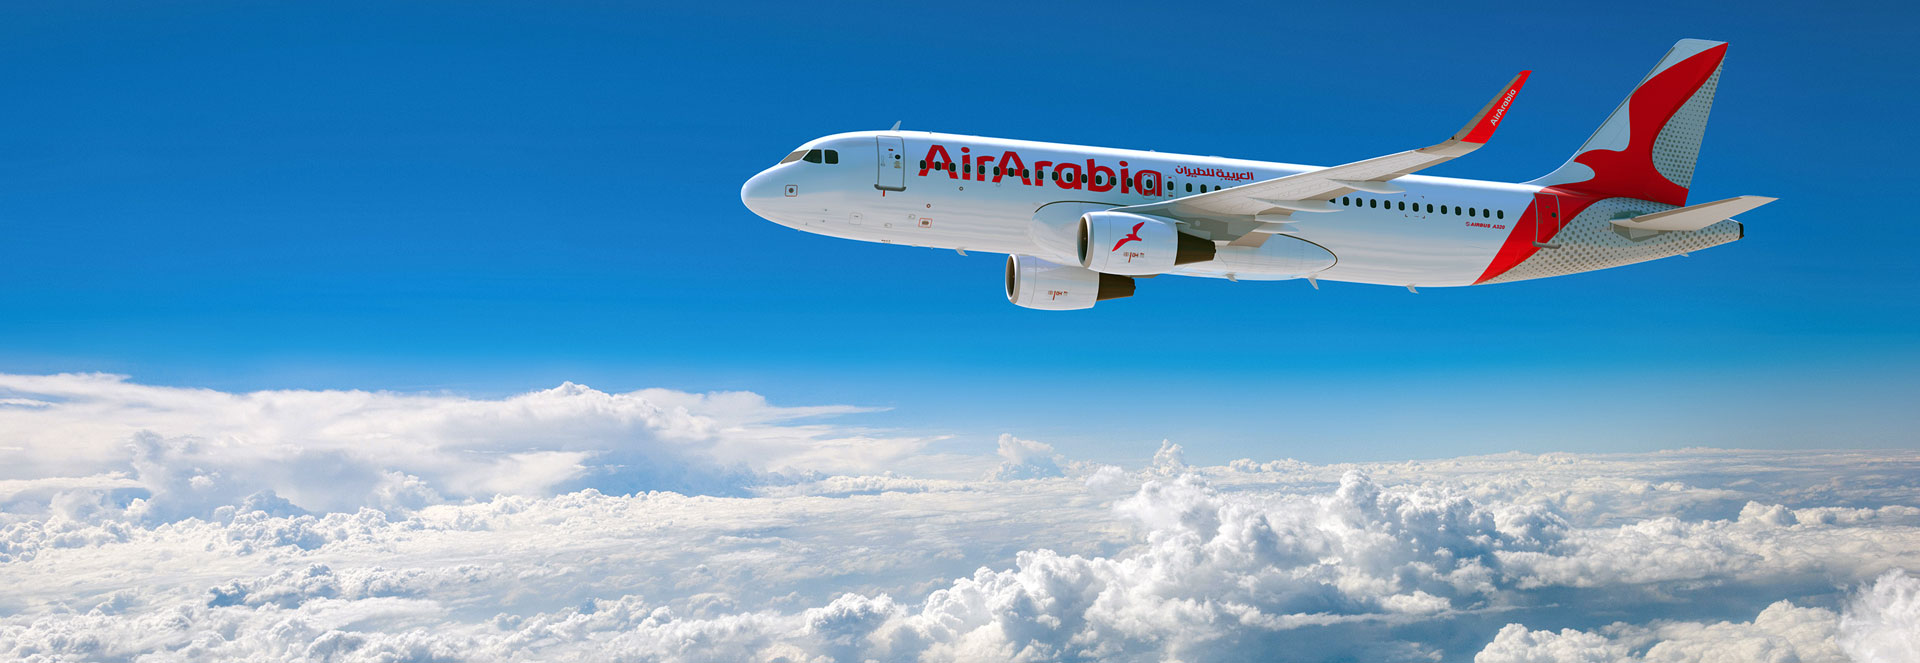 شرکت هواپیمایی ایر عربیا - Air Arabia